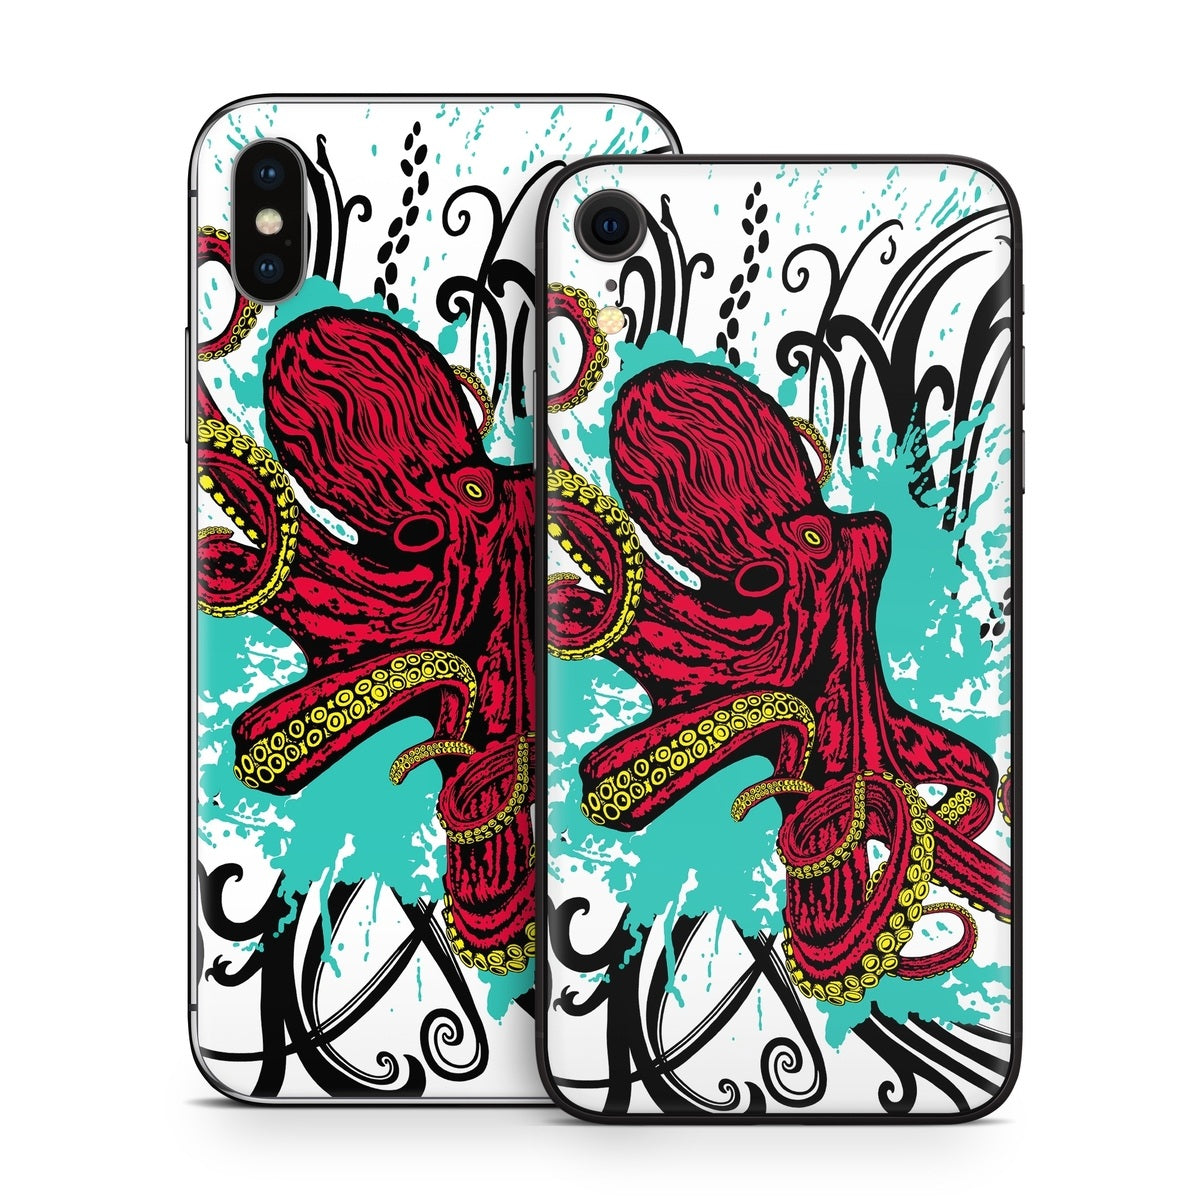 Octopus - Apple iPhone X Skin